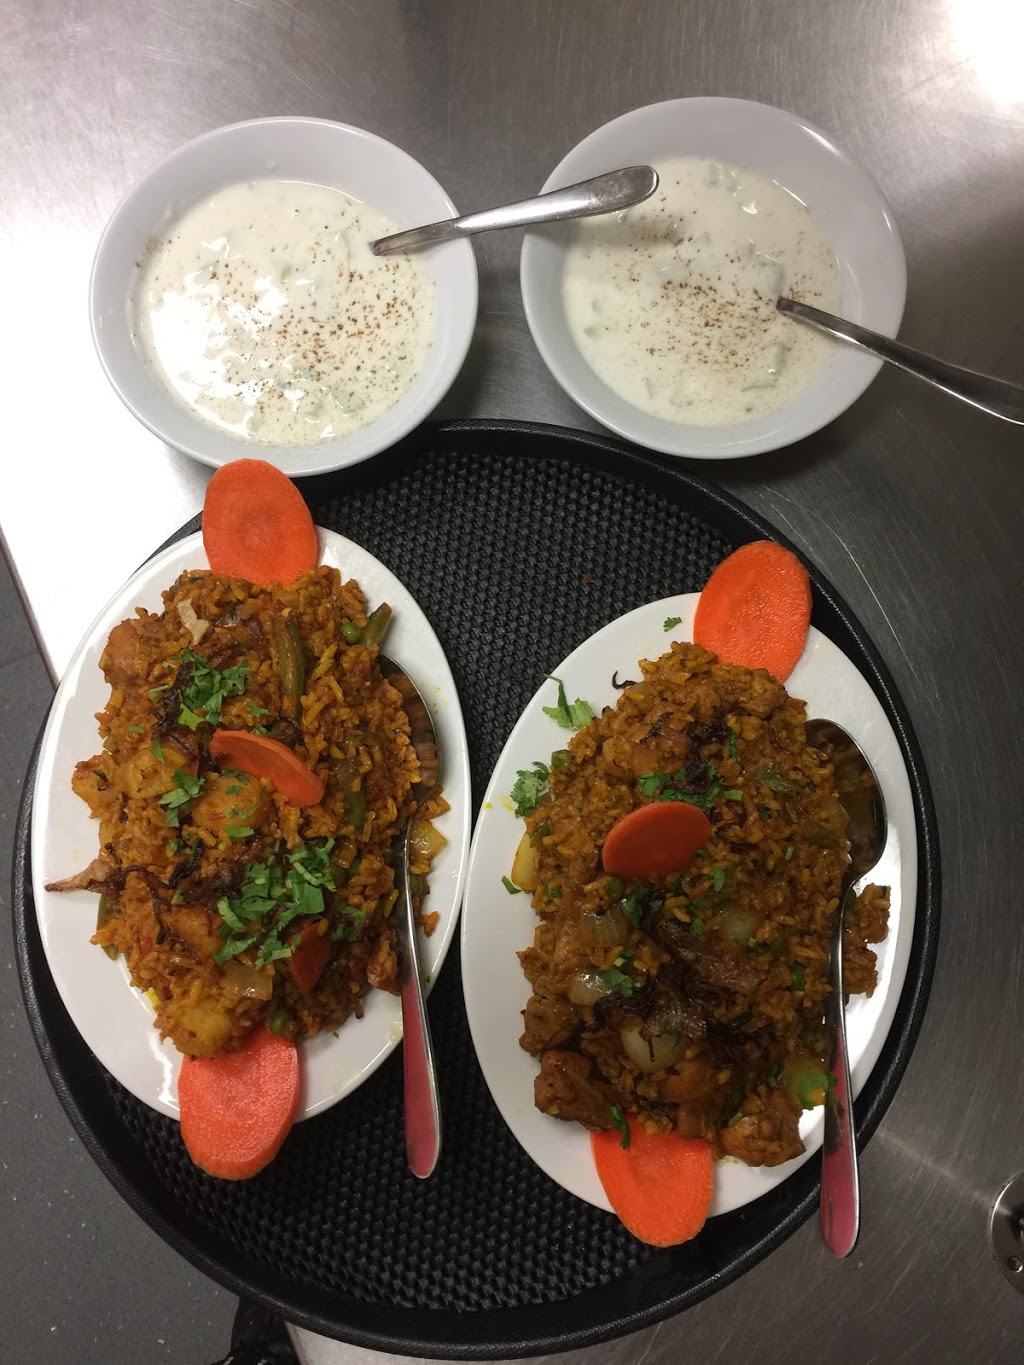 Royal Bengal Indian Restaurant | restaurant | The Oaks Shopping Village, 65 Naomai St, Bundamba QLD 4304, Australia | 0731435160 OR +61 7 3143 5160